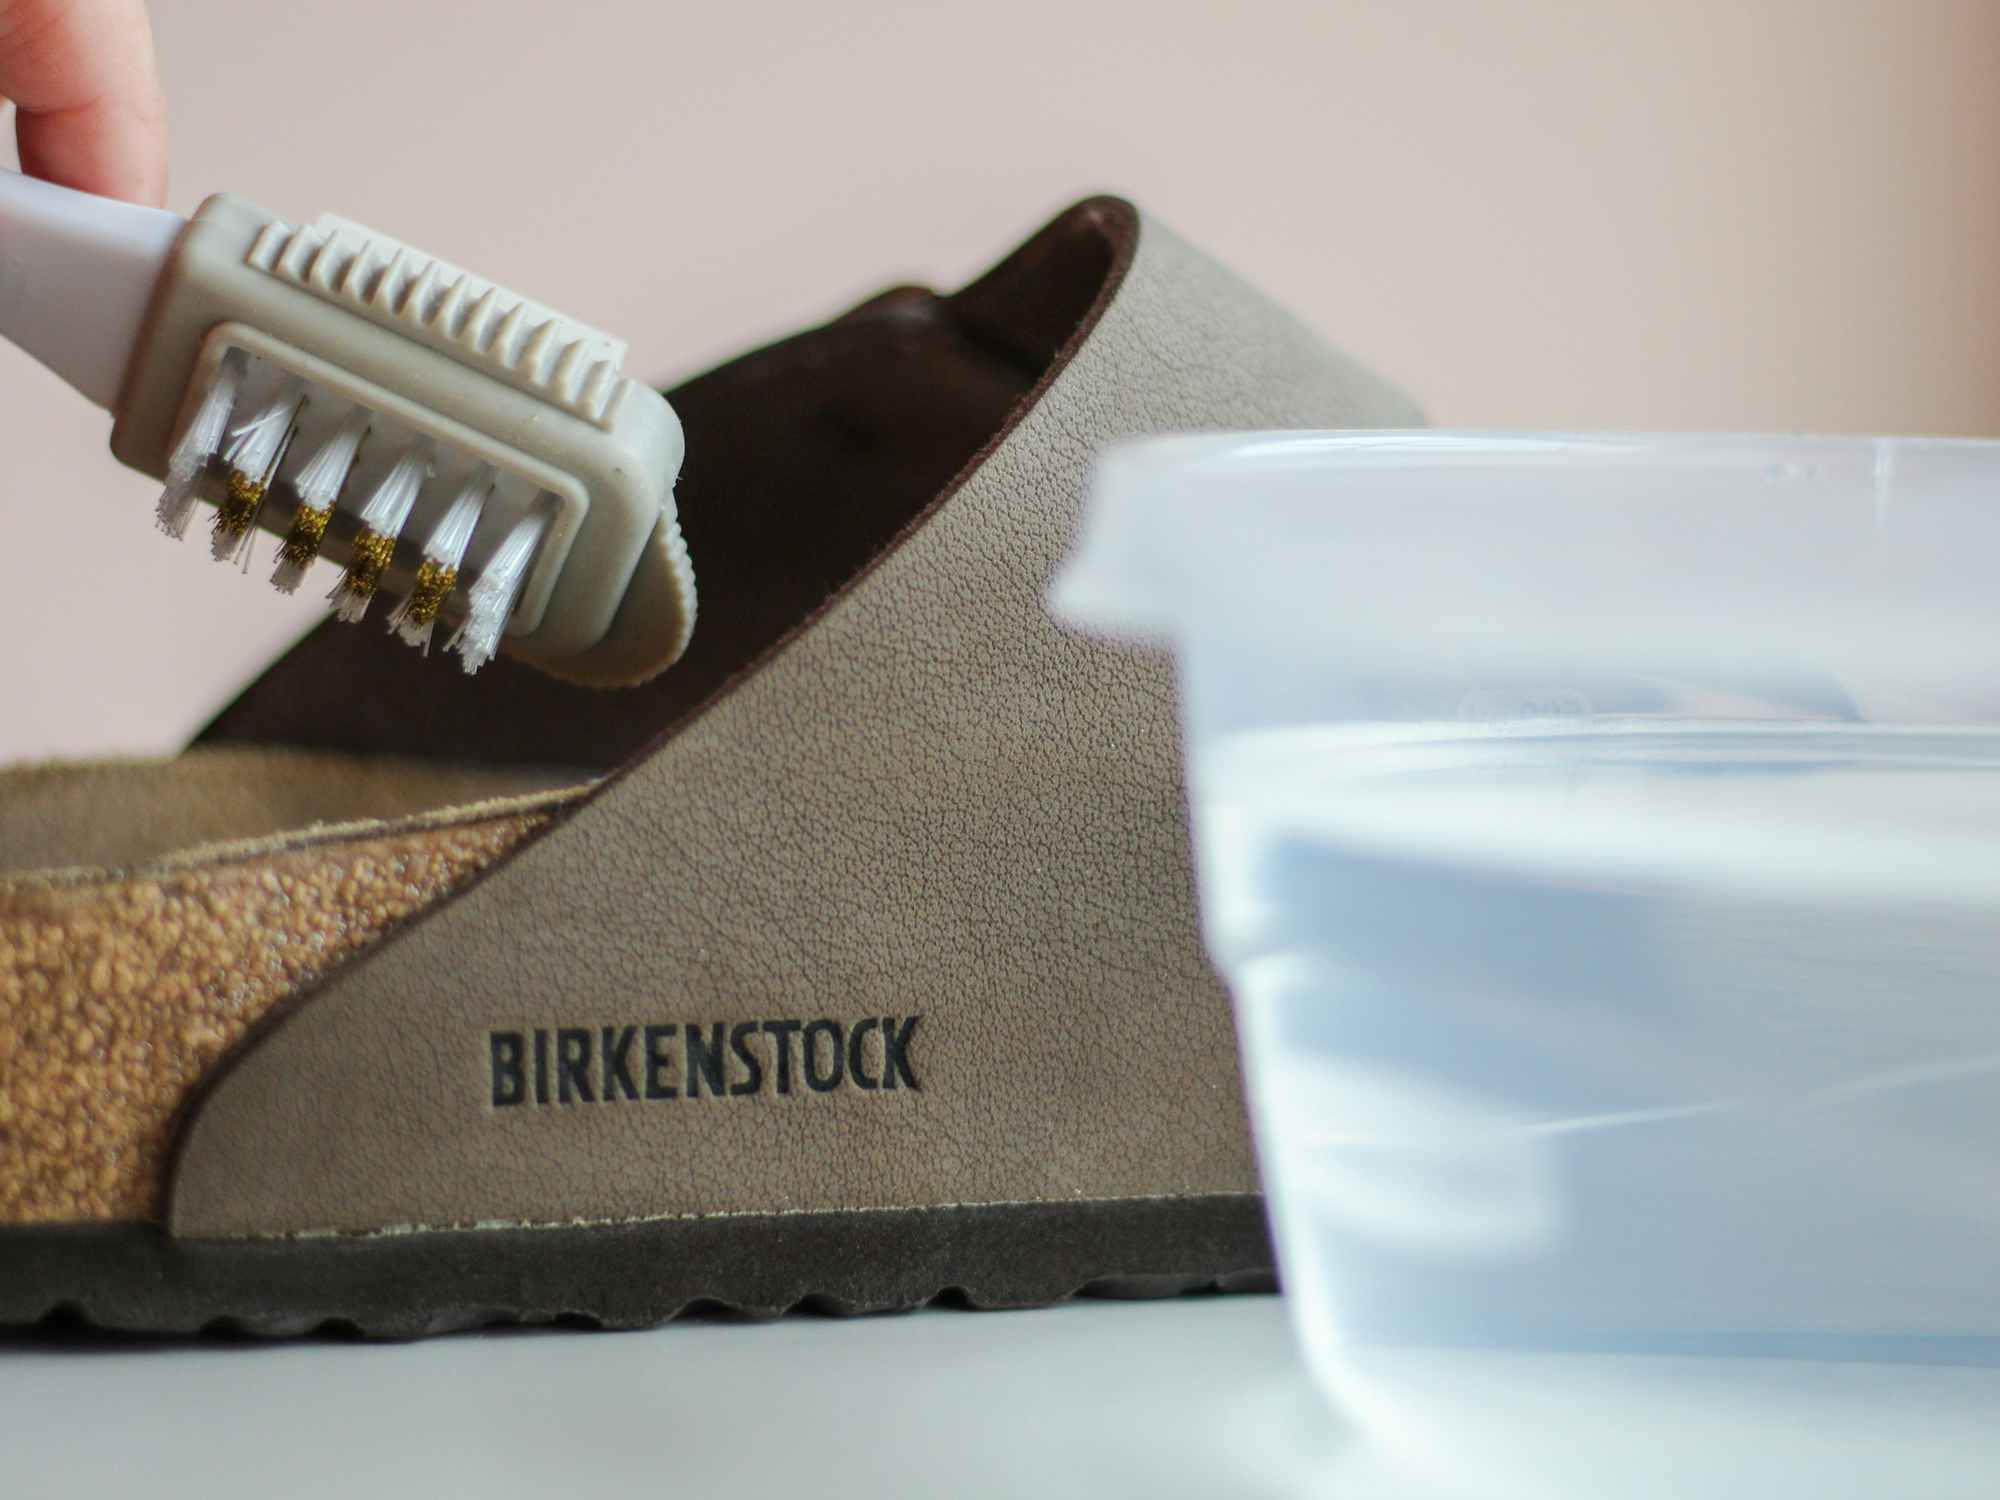 Birkenstock Cork Sealer